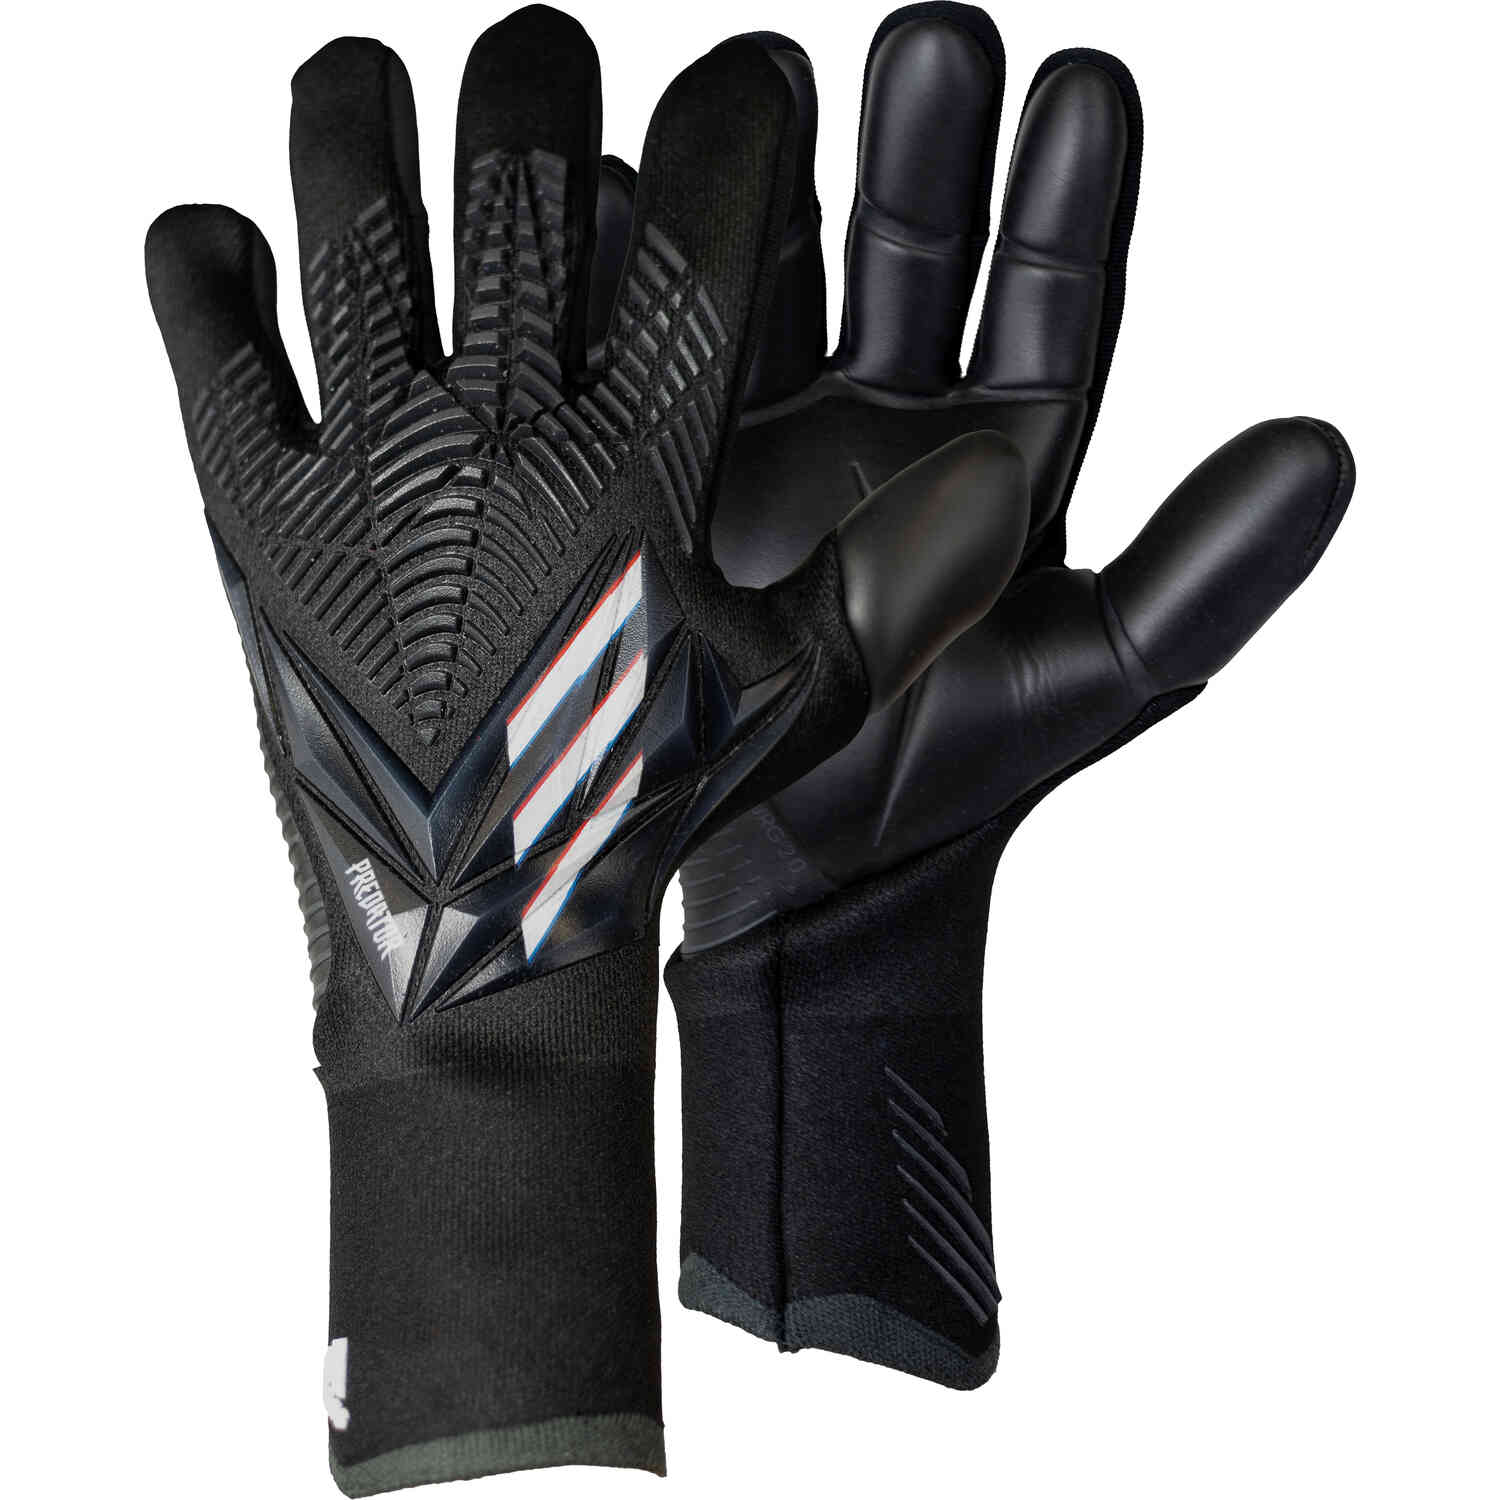 Pro Goalkeeper Gloves - Edge Darkness - SoccerPro